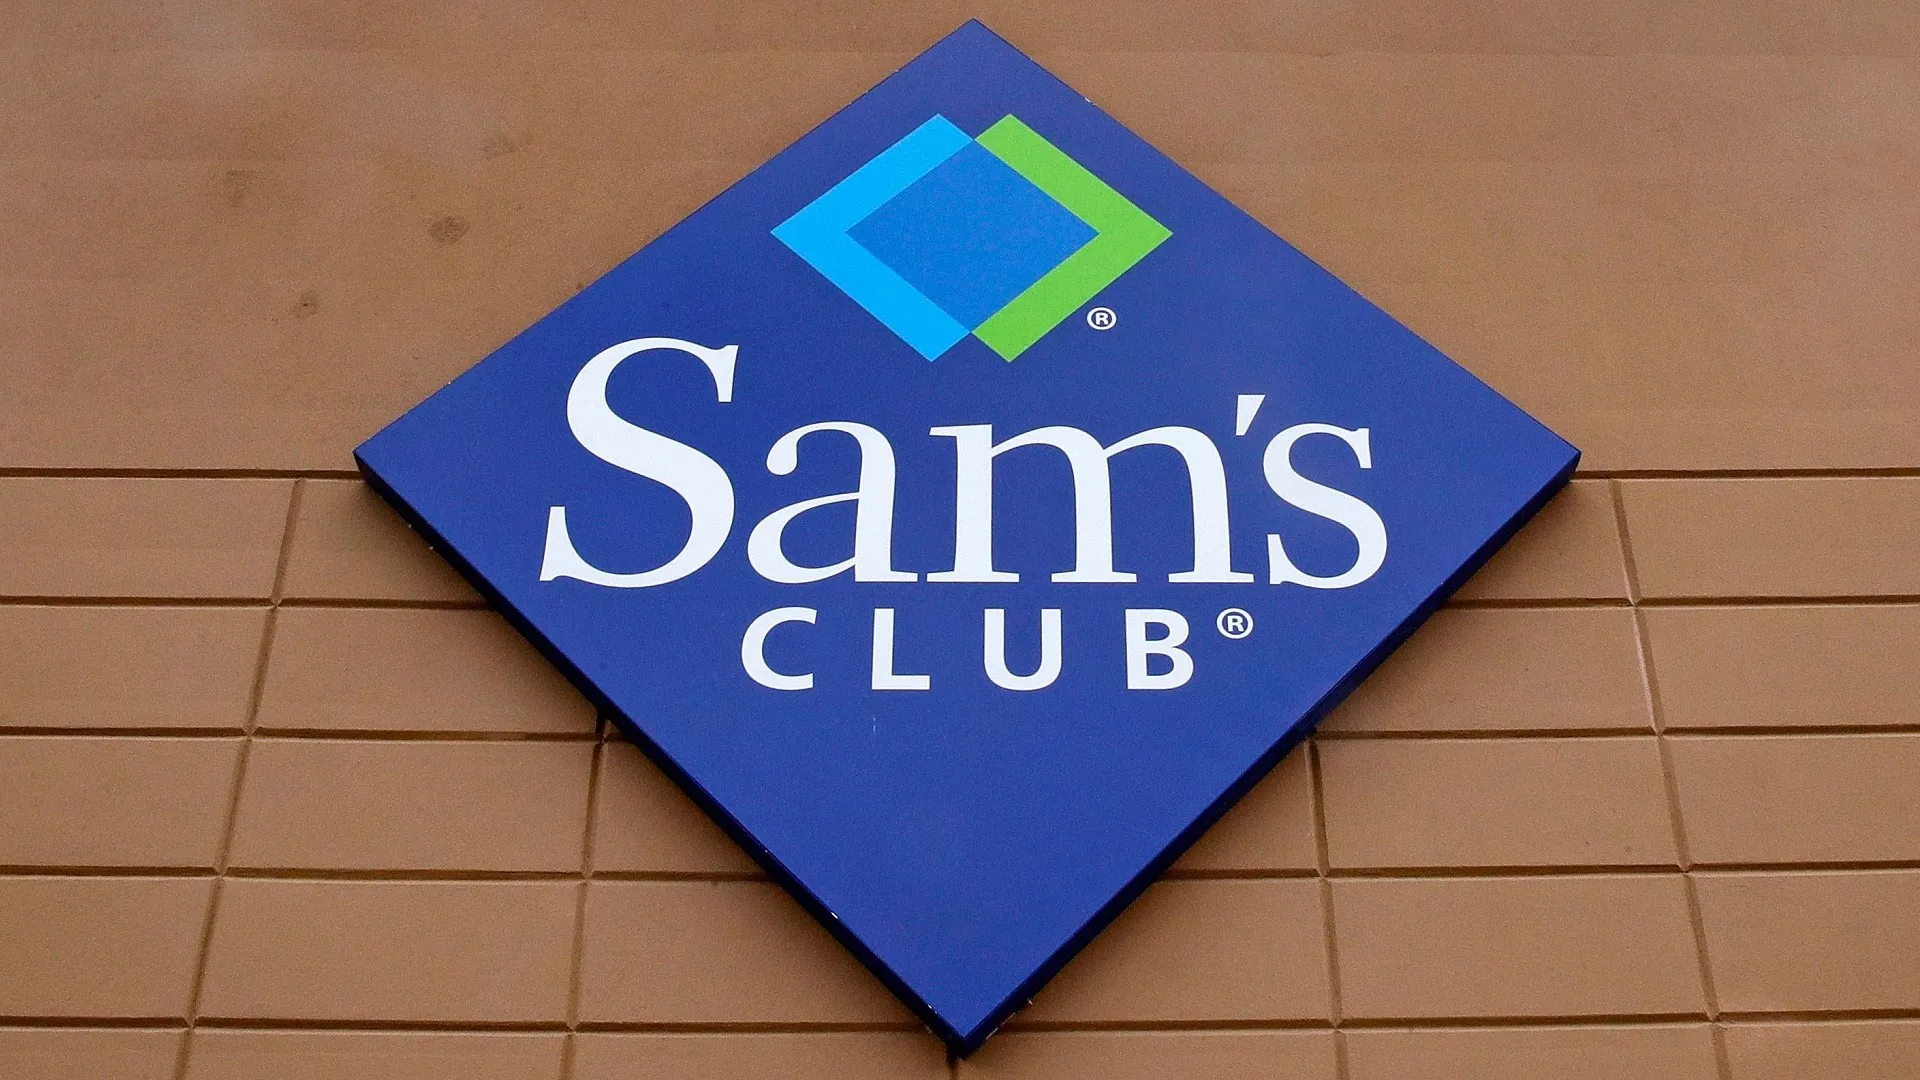 Sam's Club consolidates private brand to “Member's Mark” label